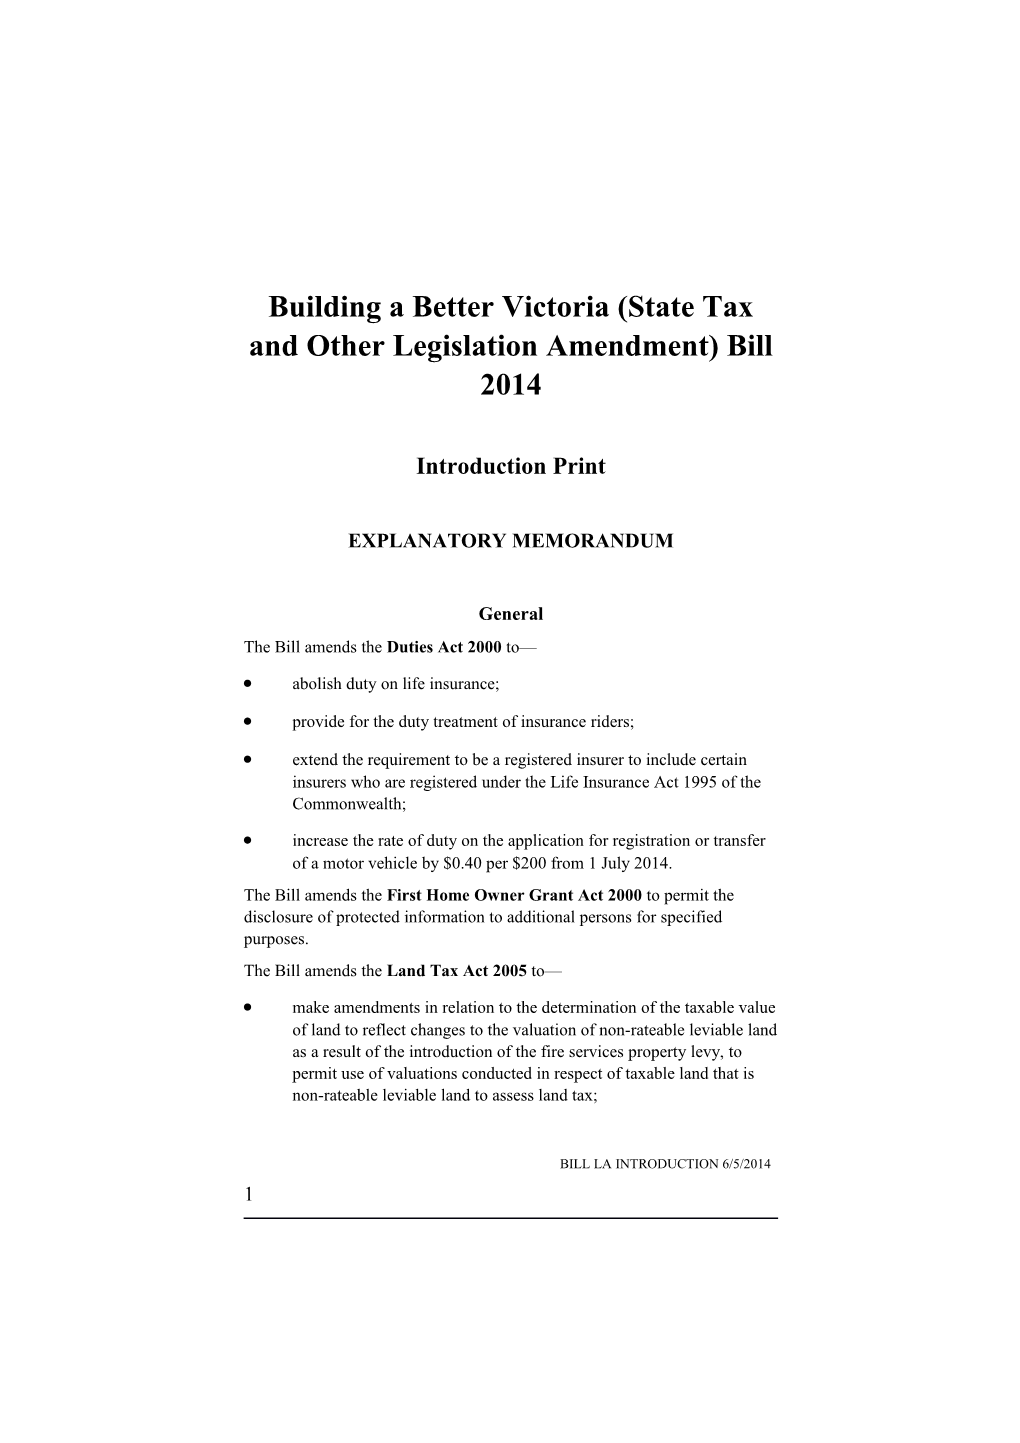 Building a Better Victoria (State Tax and Other Legislation Amendment) Bill 2014